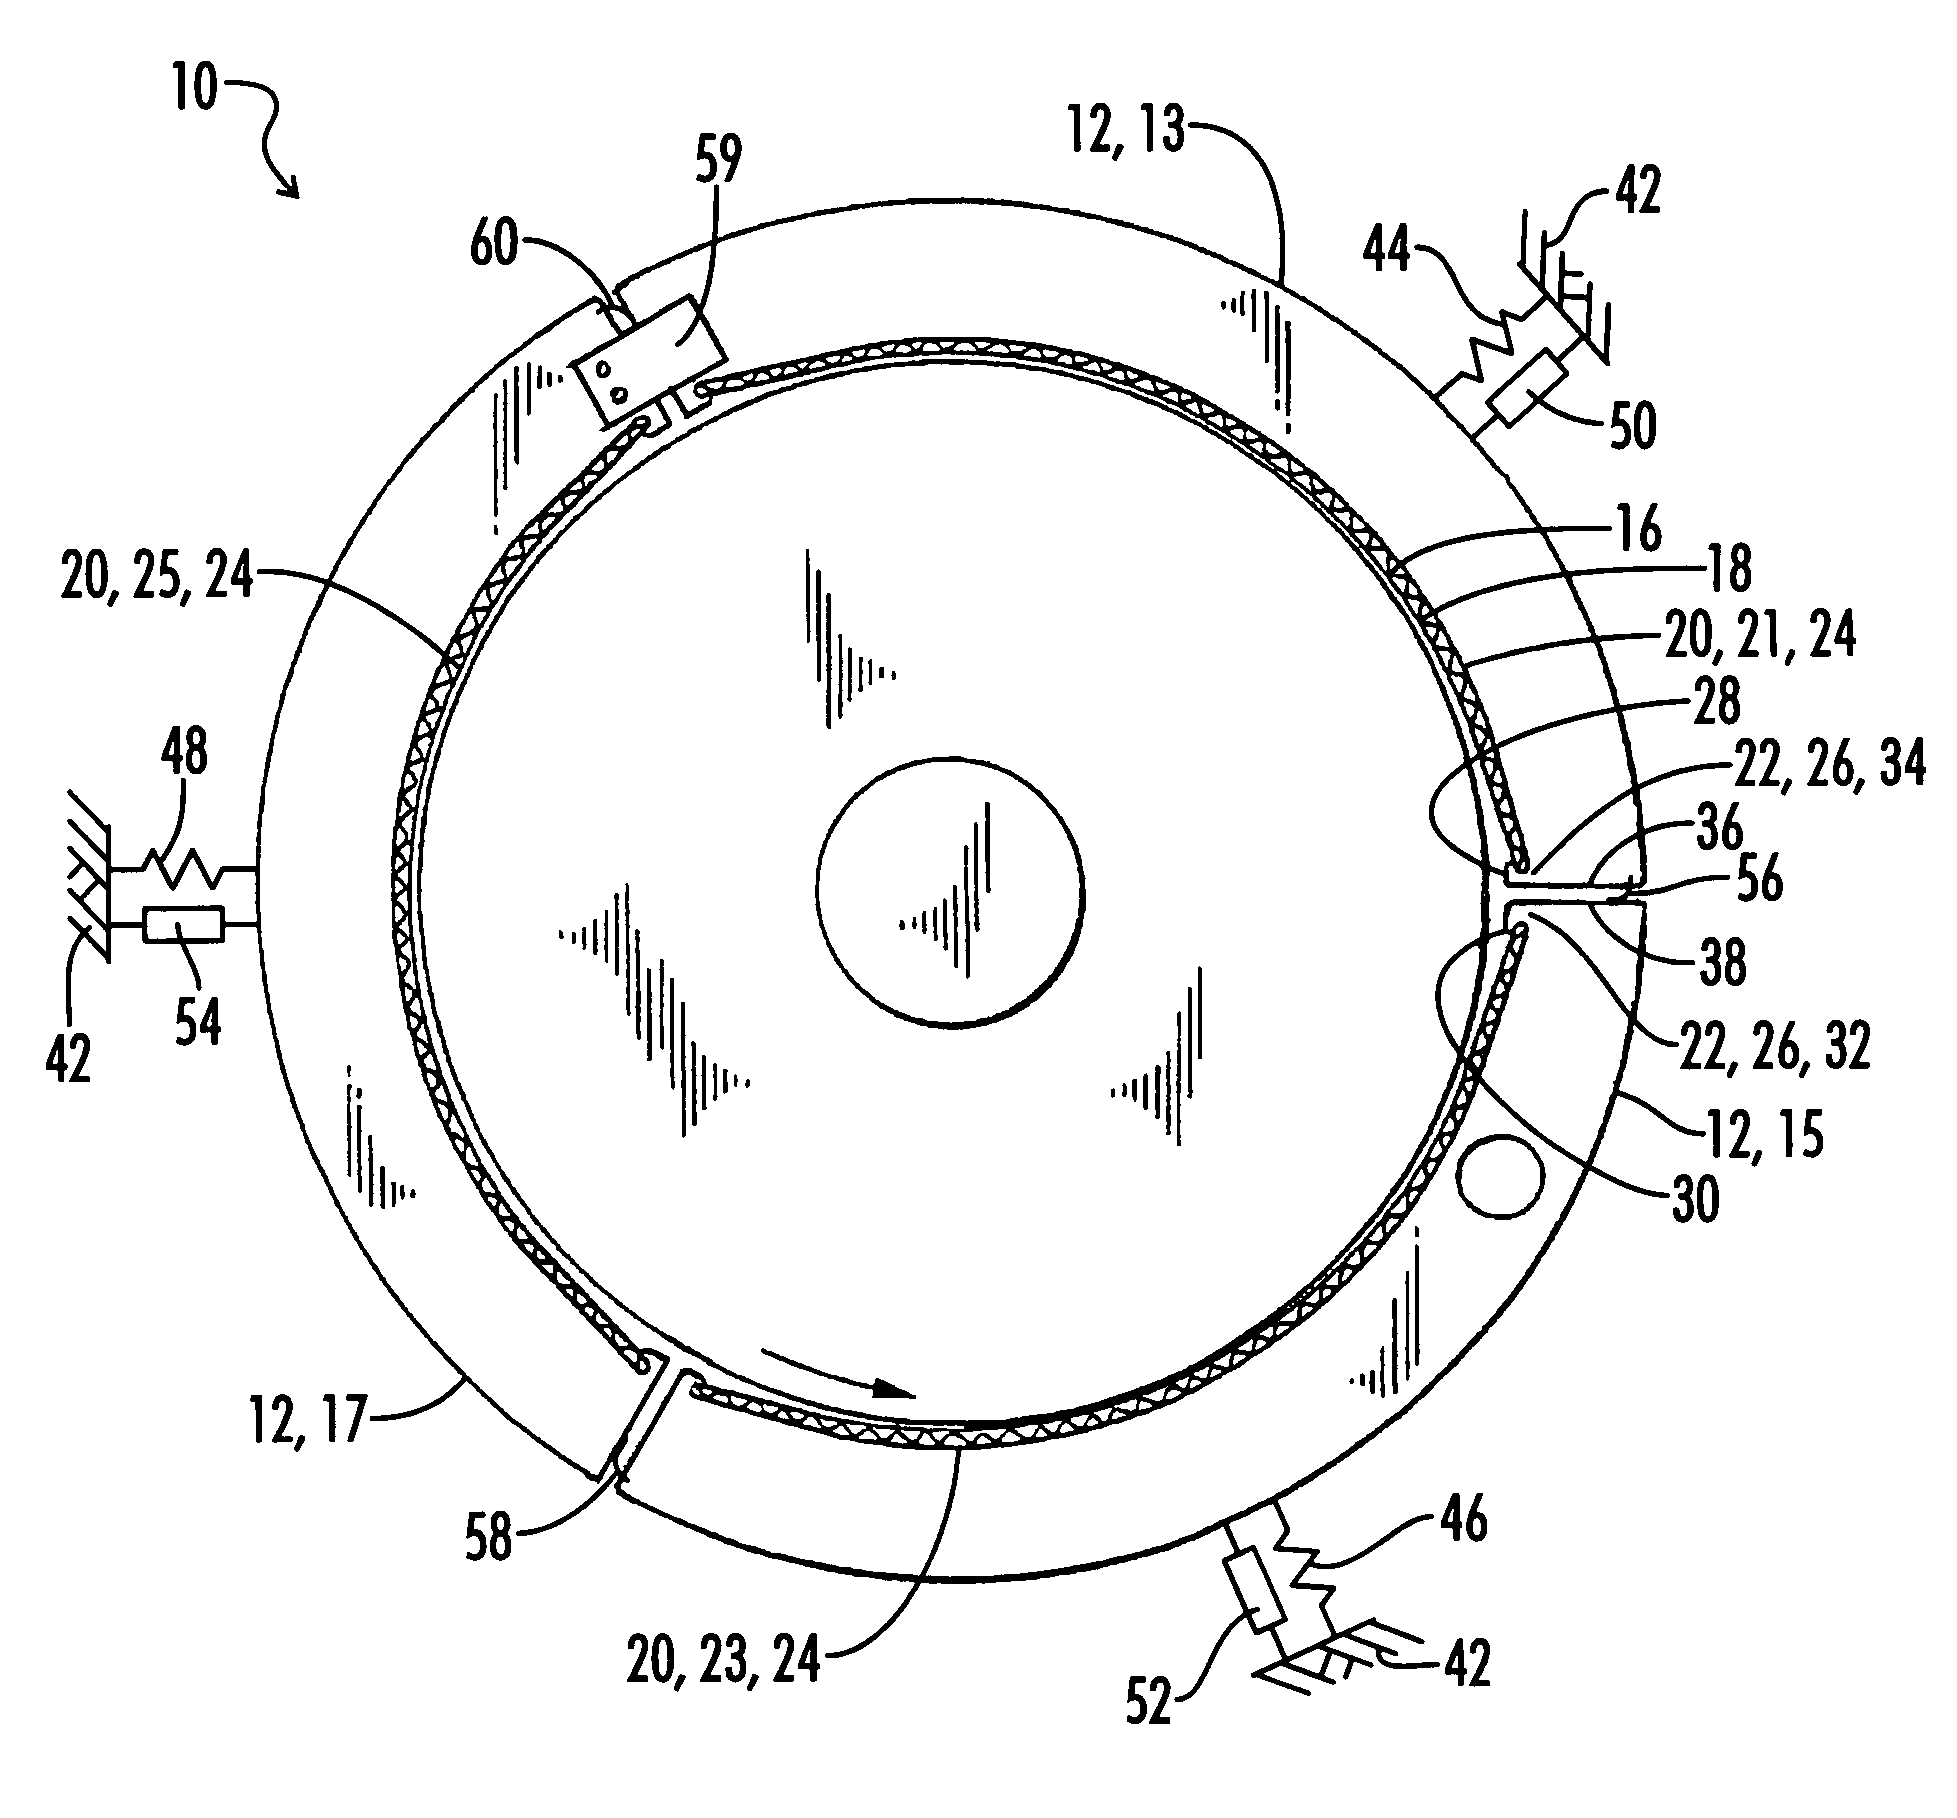 Compliant foil fluid film radial bearing or seal